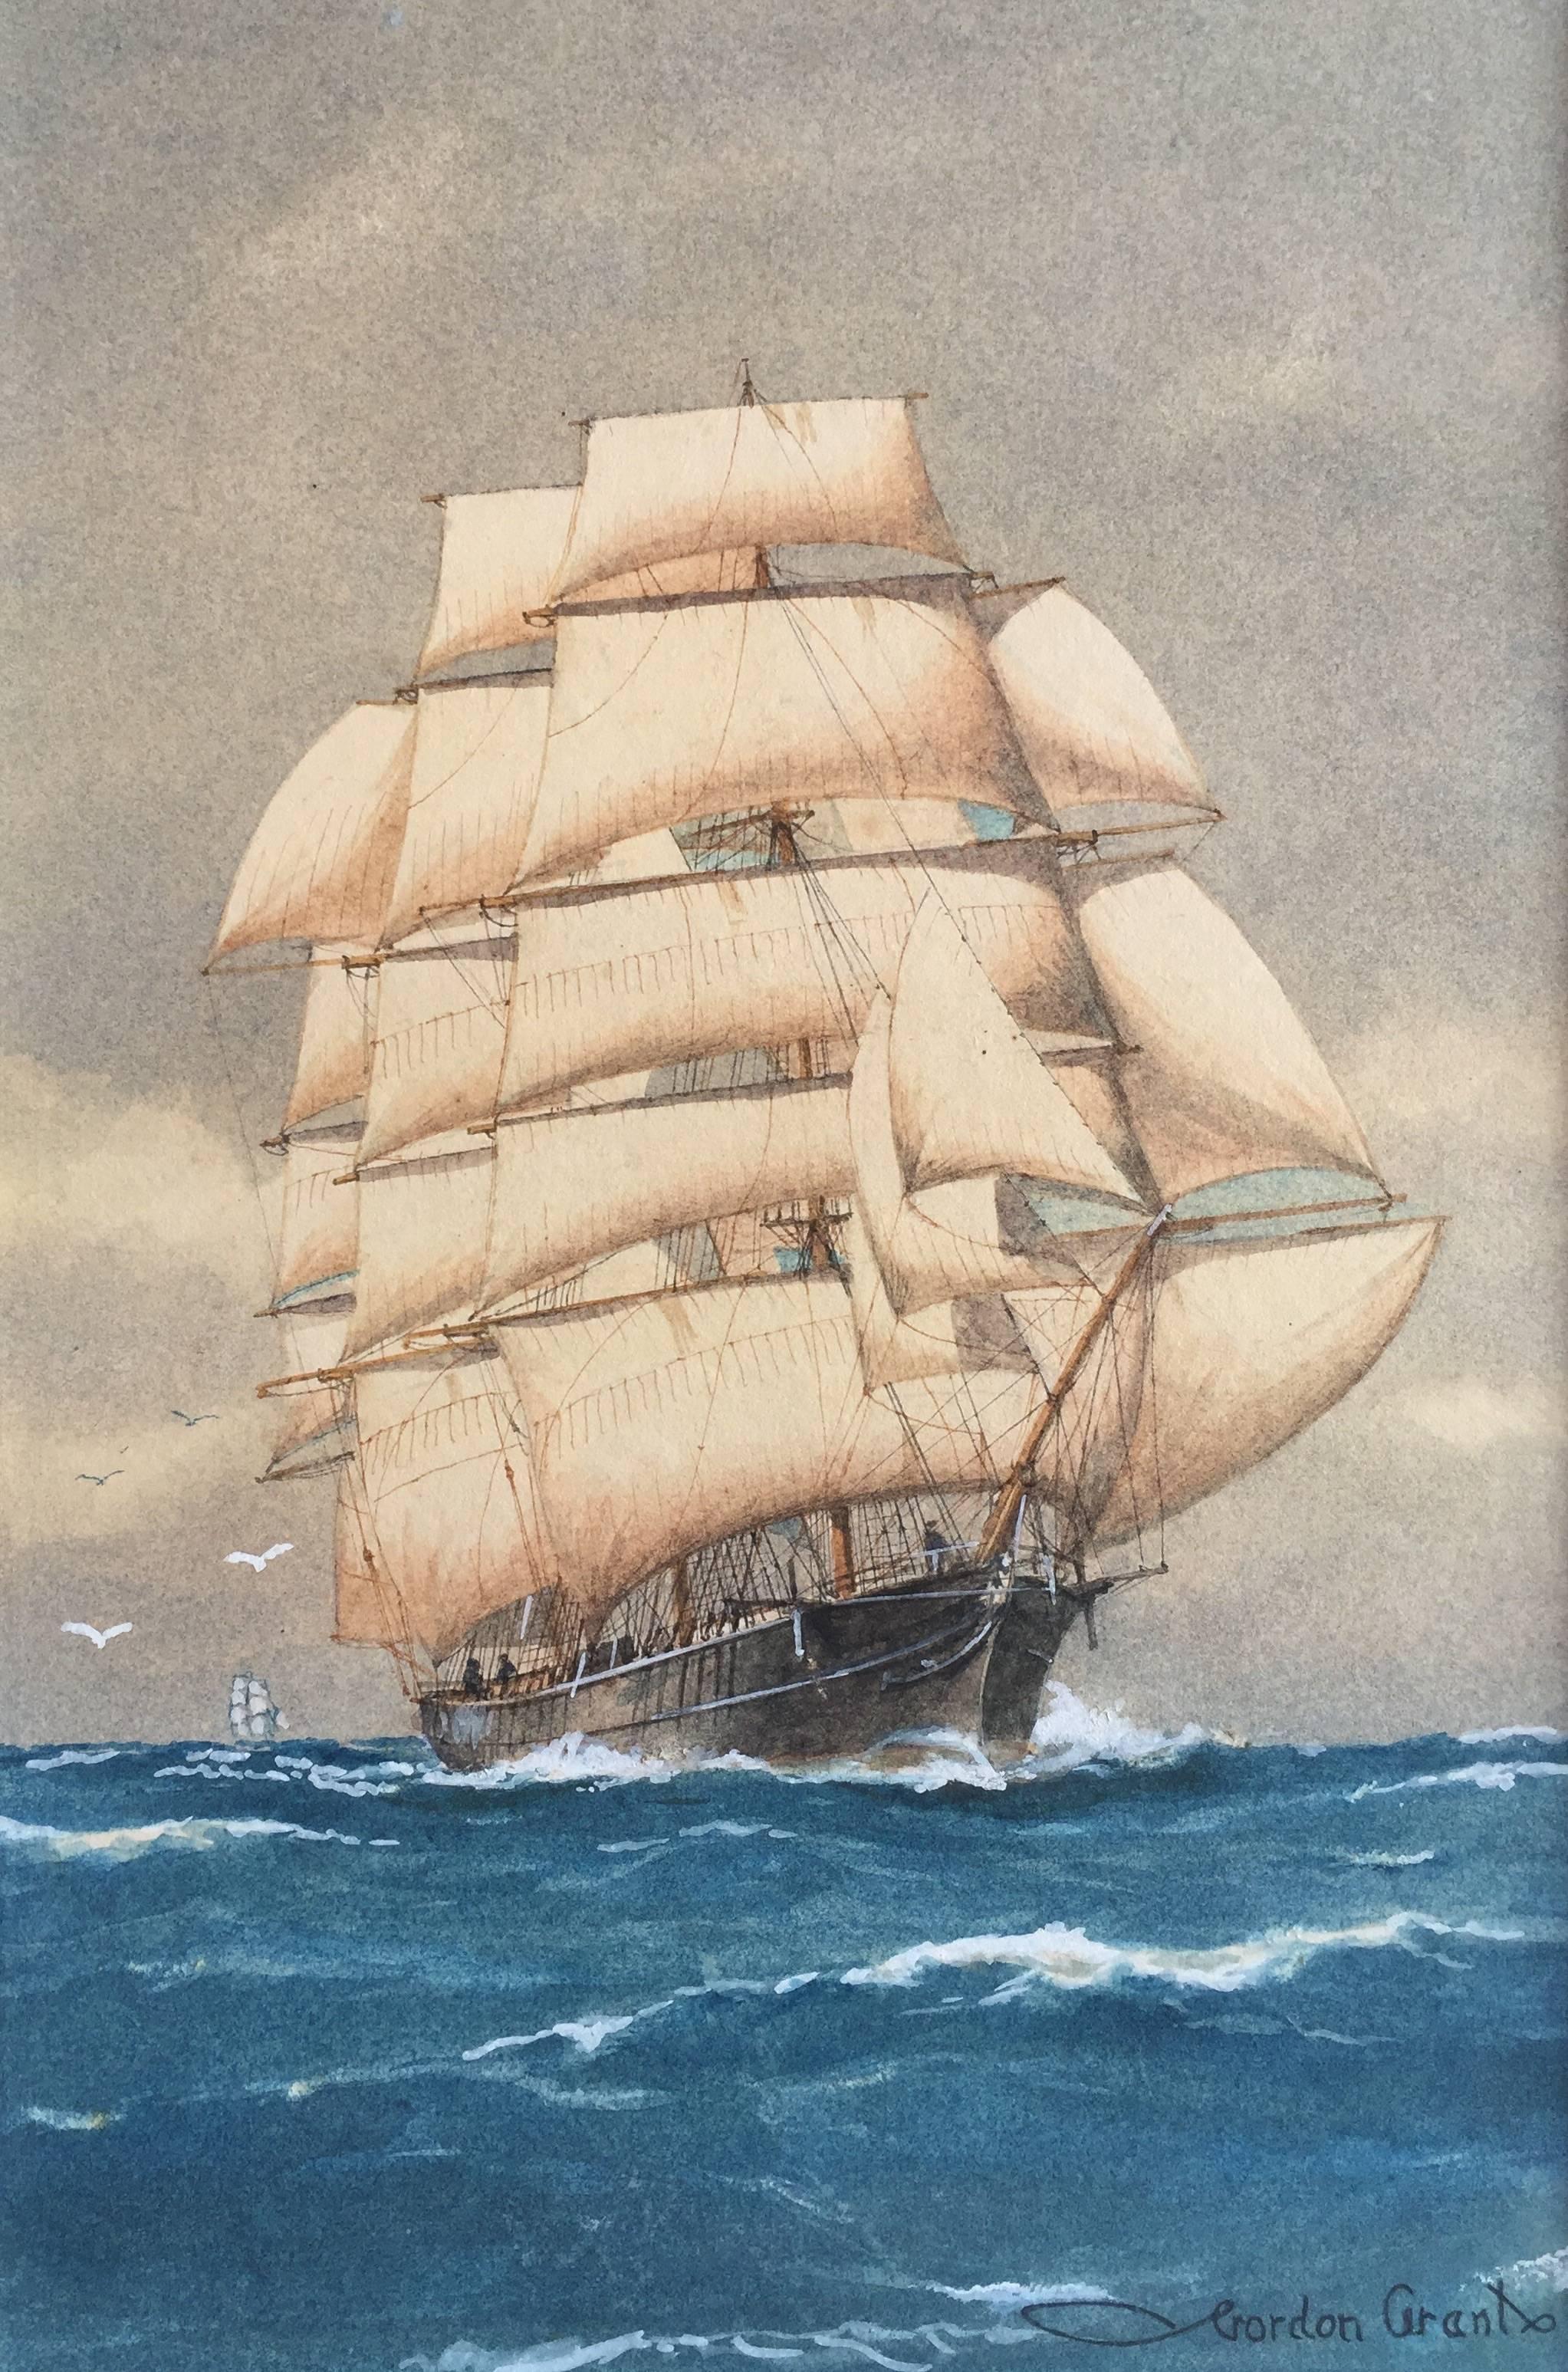 Gordon Grant Landscape Art - "Full Sail"